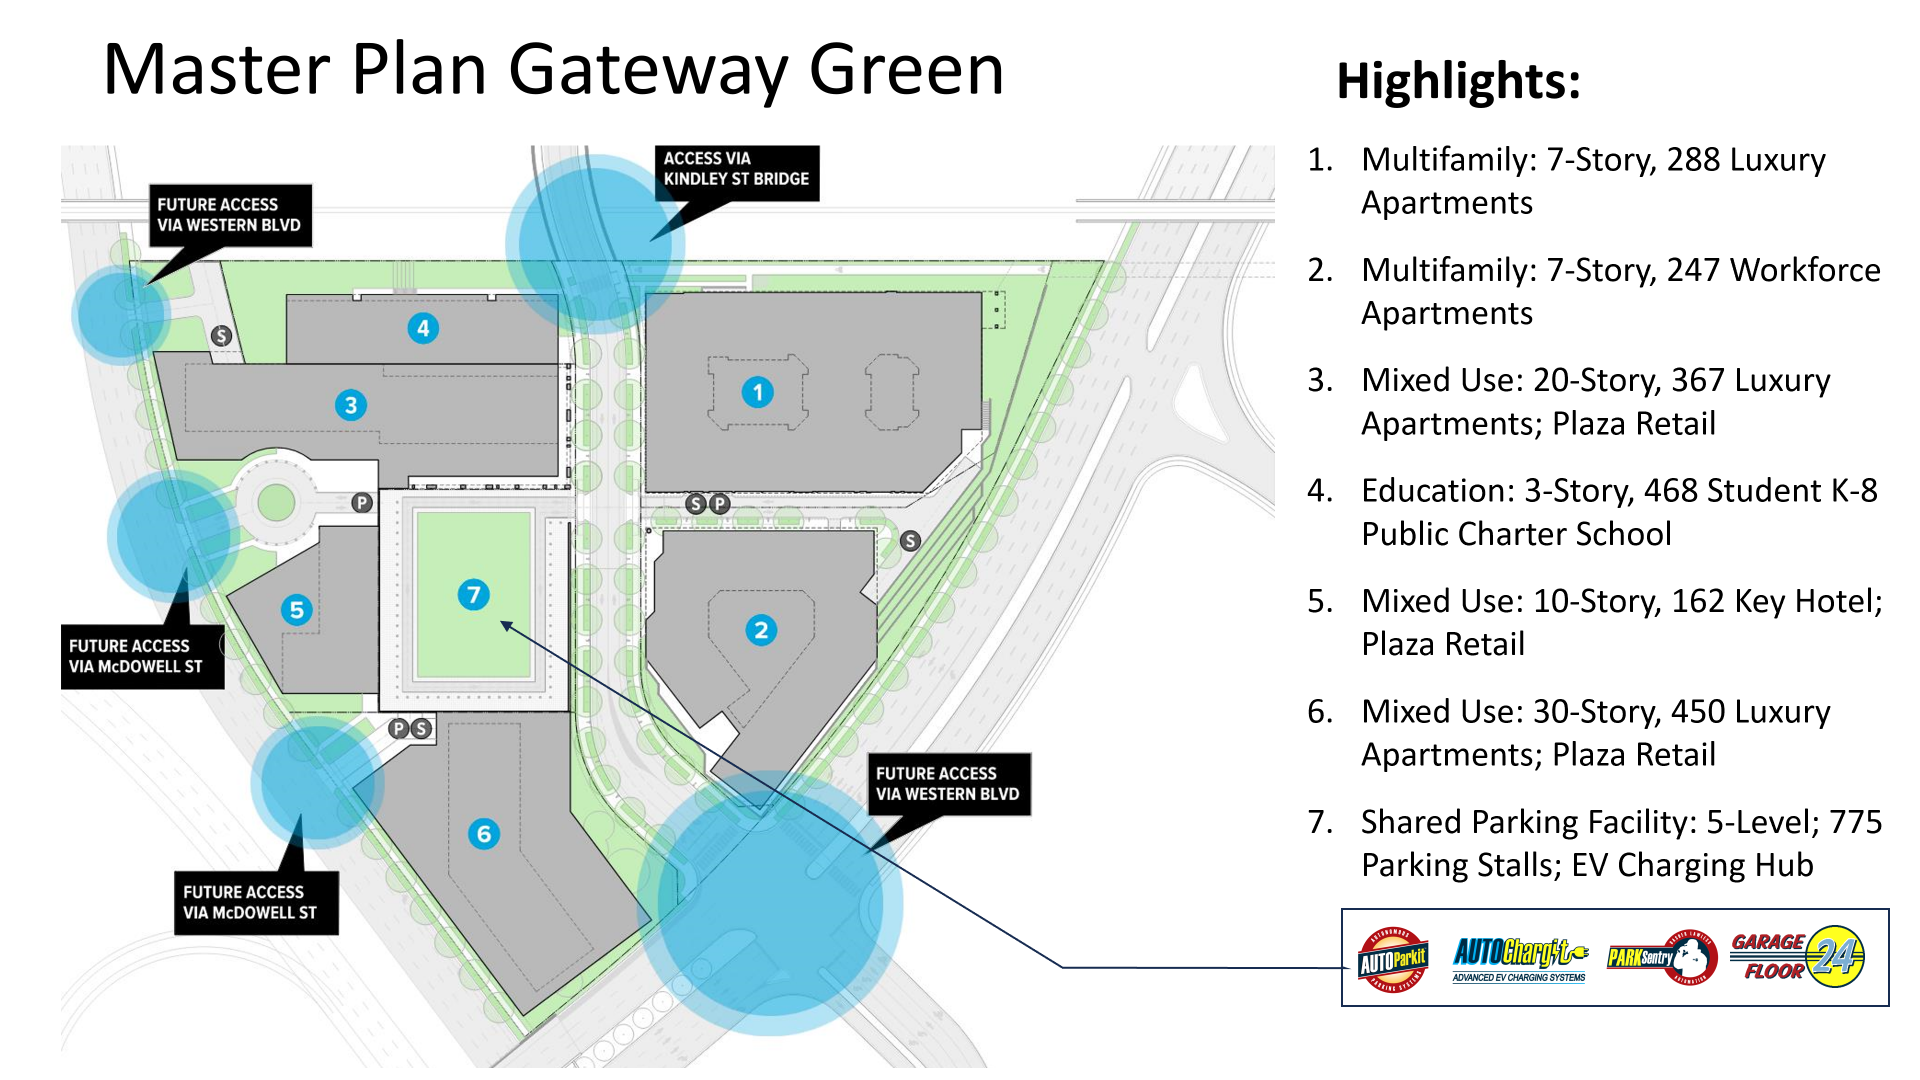 Proposed Master Plan of Gateway Green using AUTOParkit, AUTOChargit, PARKSentry, and GarageFloor24